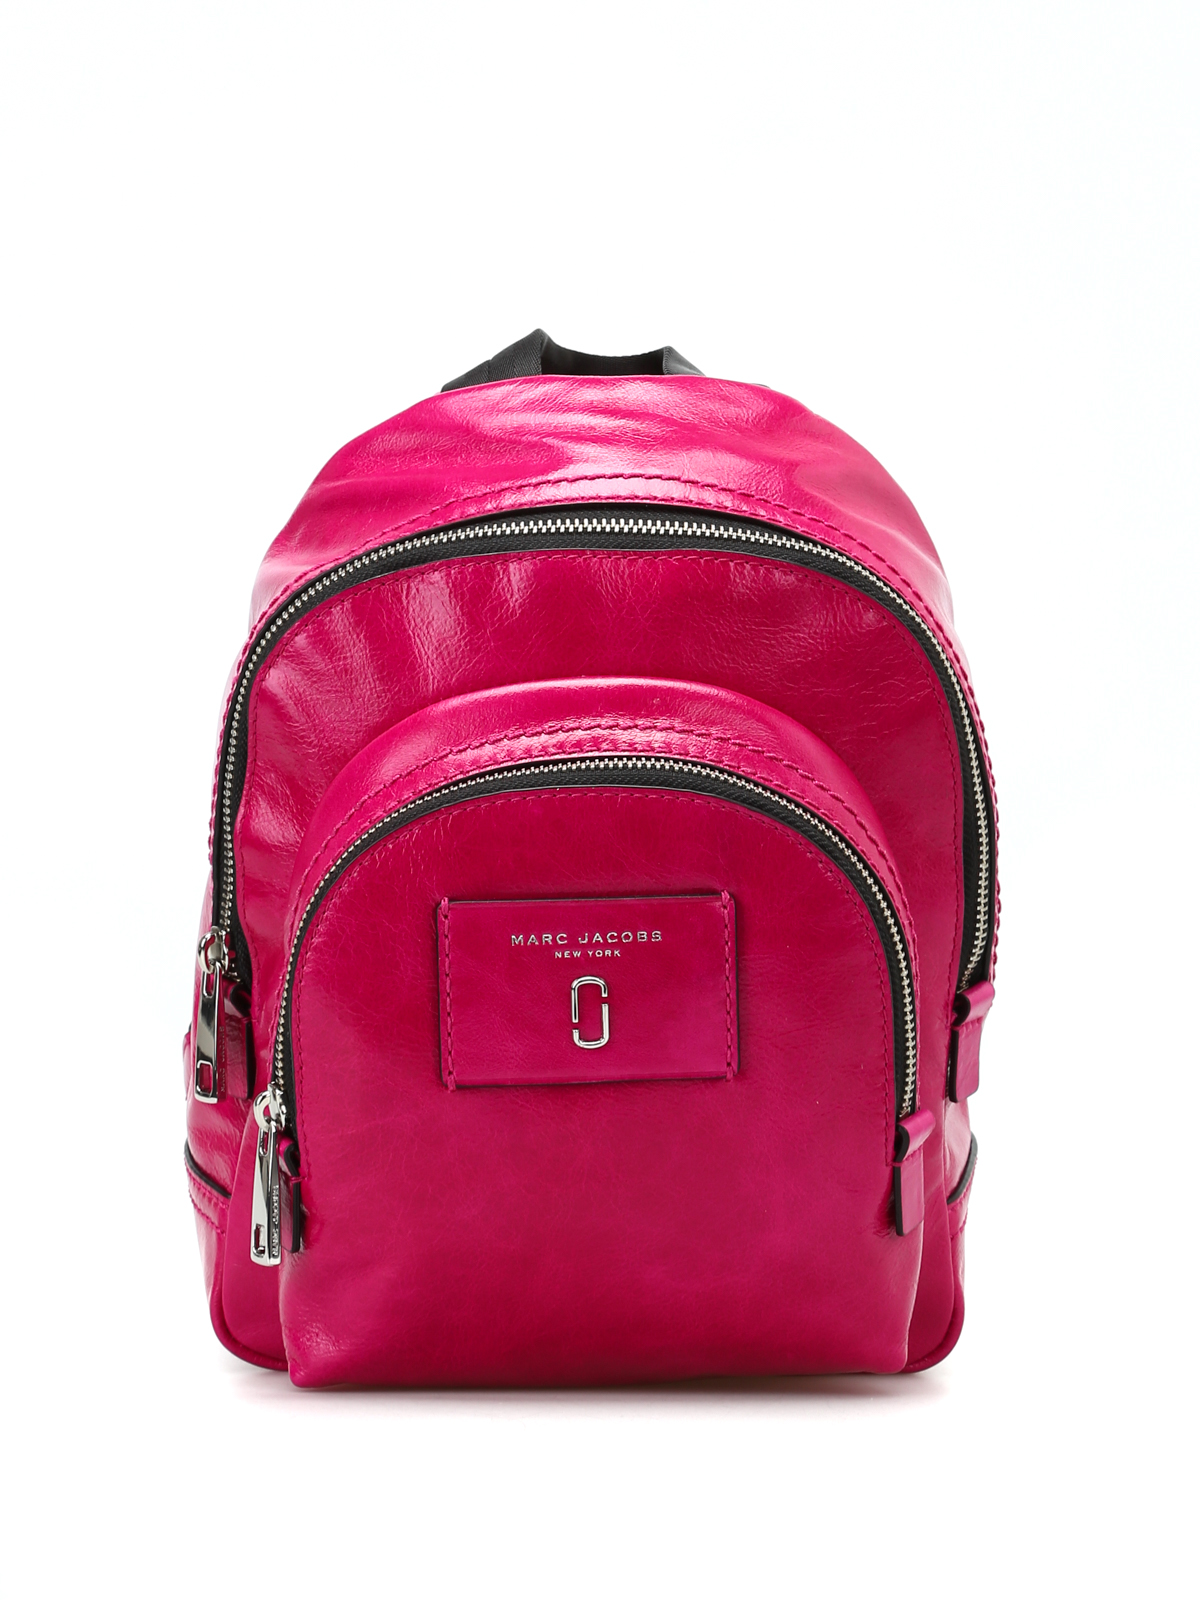 Marc Jacobs - Crackle leather mini backpack - backpacks - M0013264451